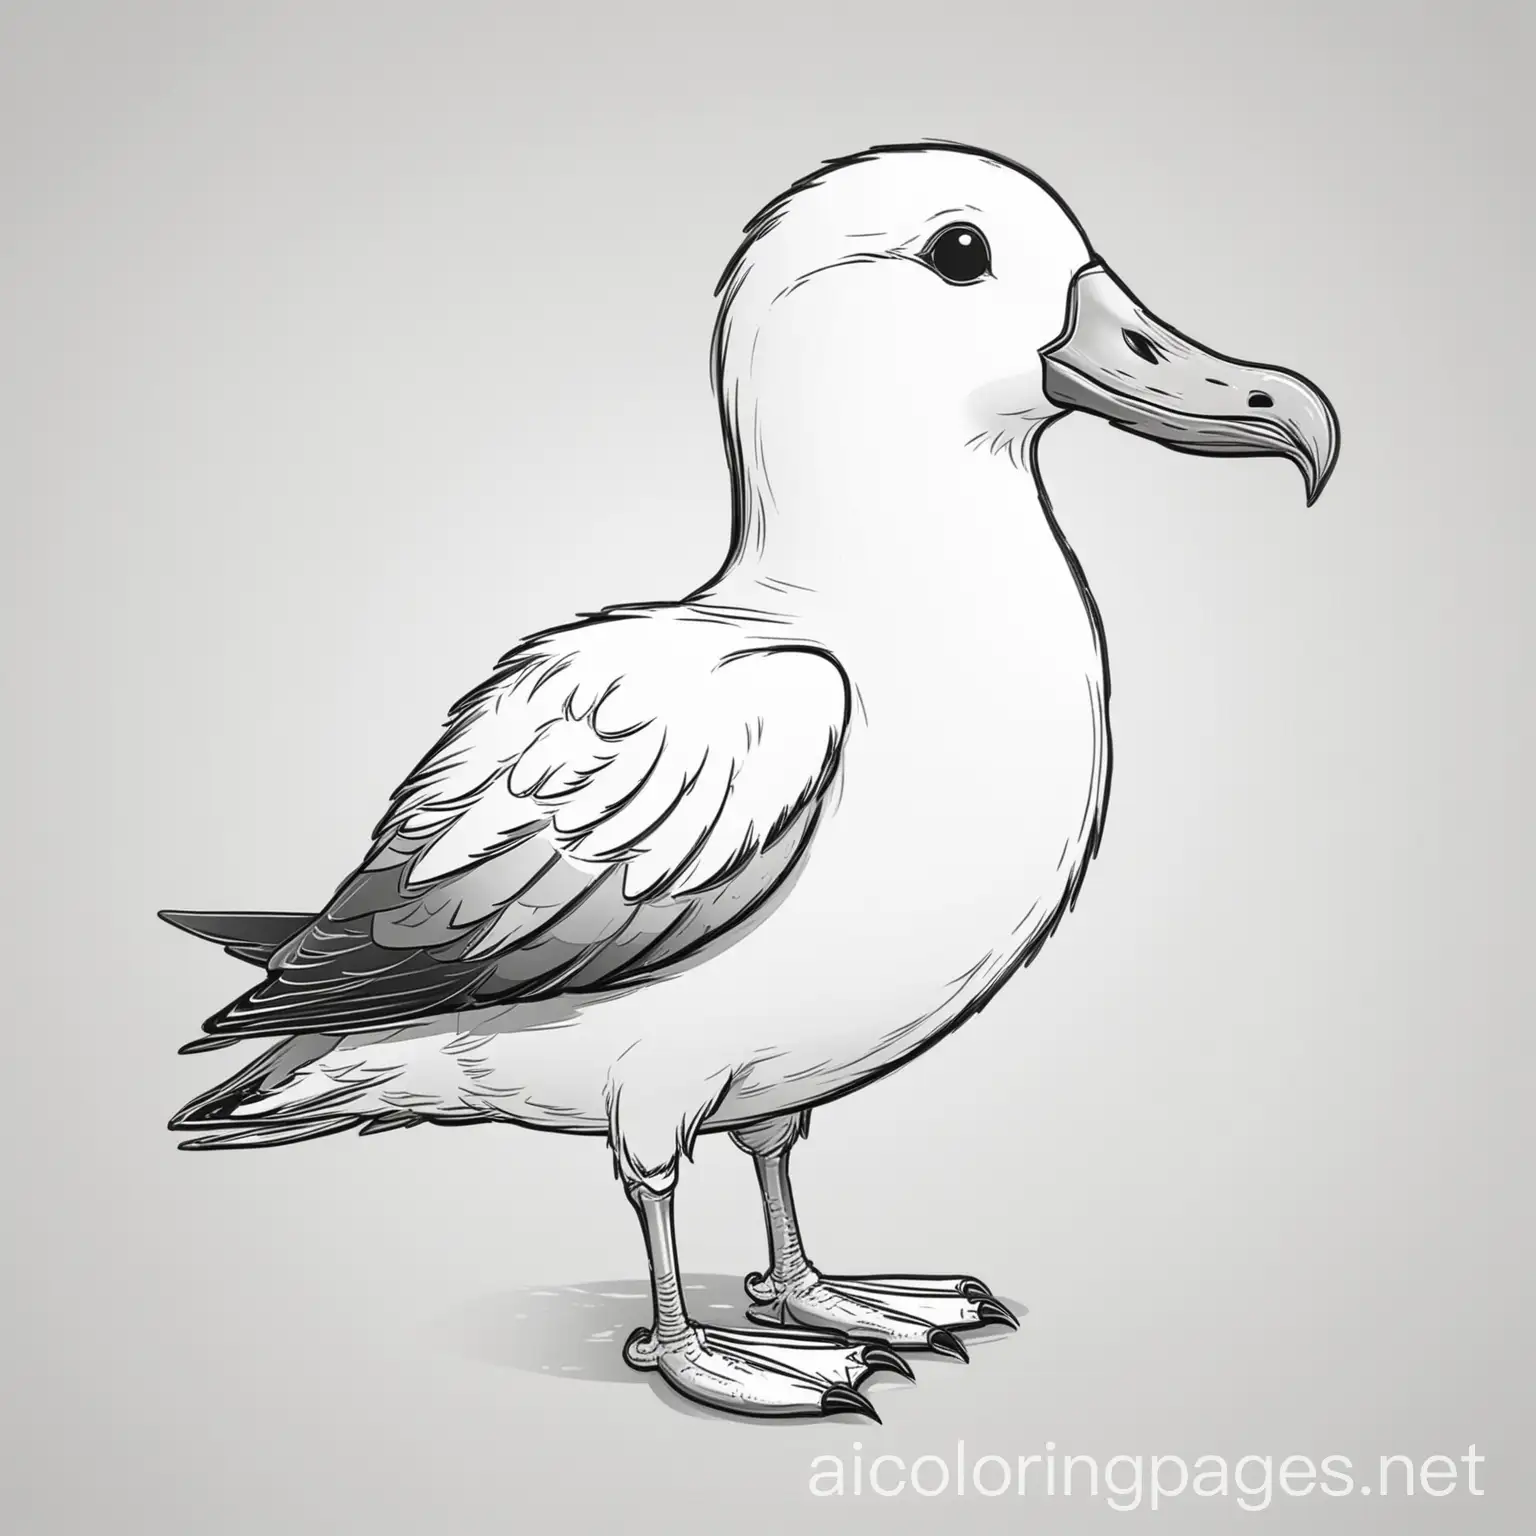 Albatross-Cartoon-Coloring-Page-Simple-Line-Art-for-Kids